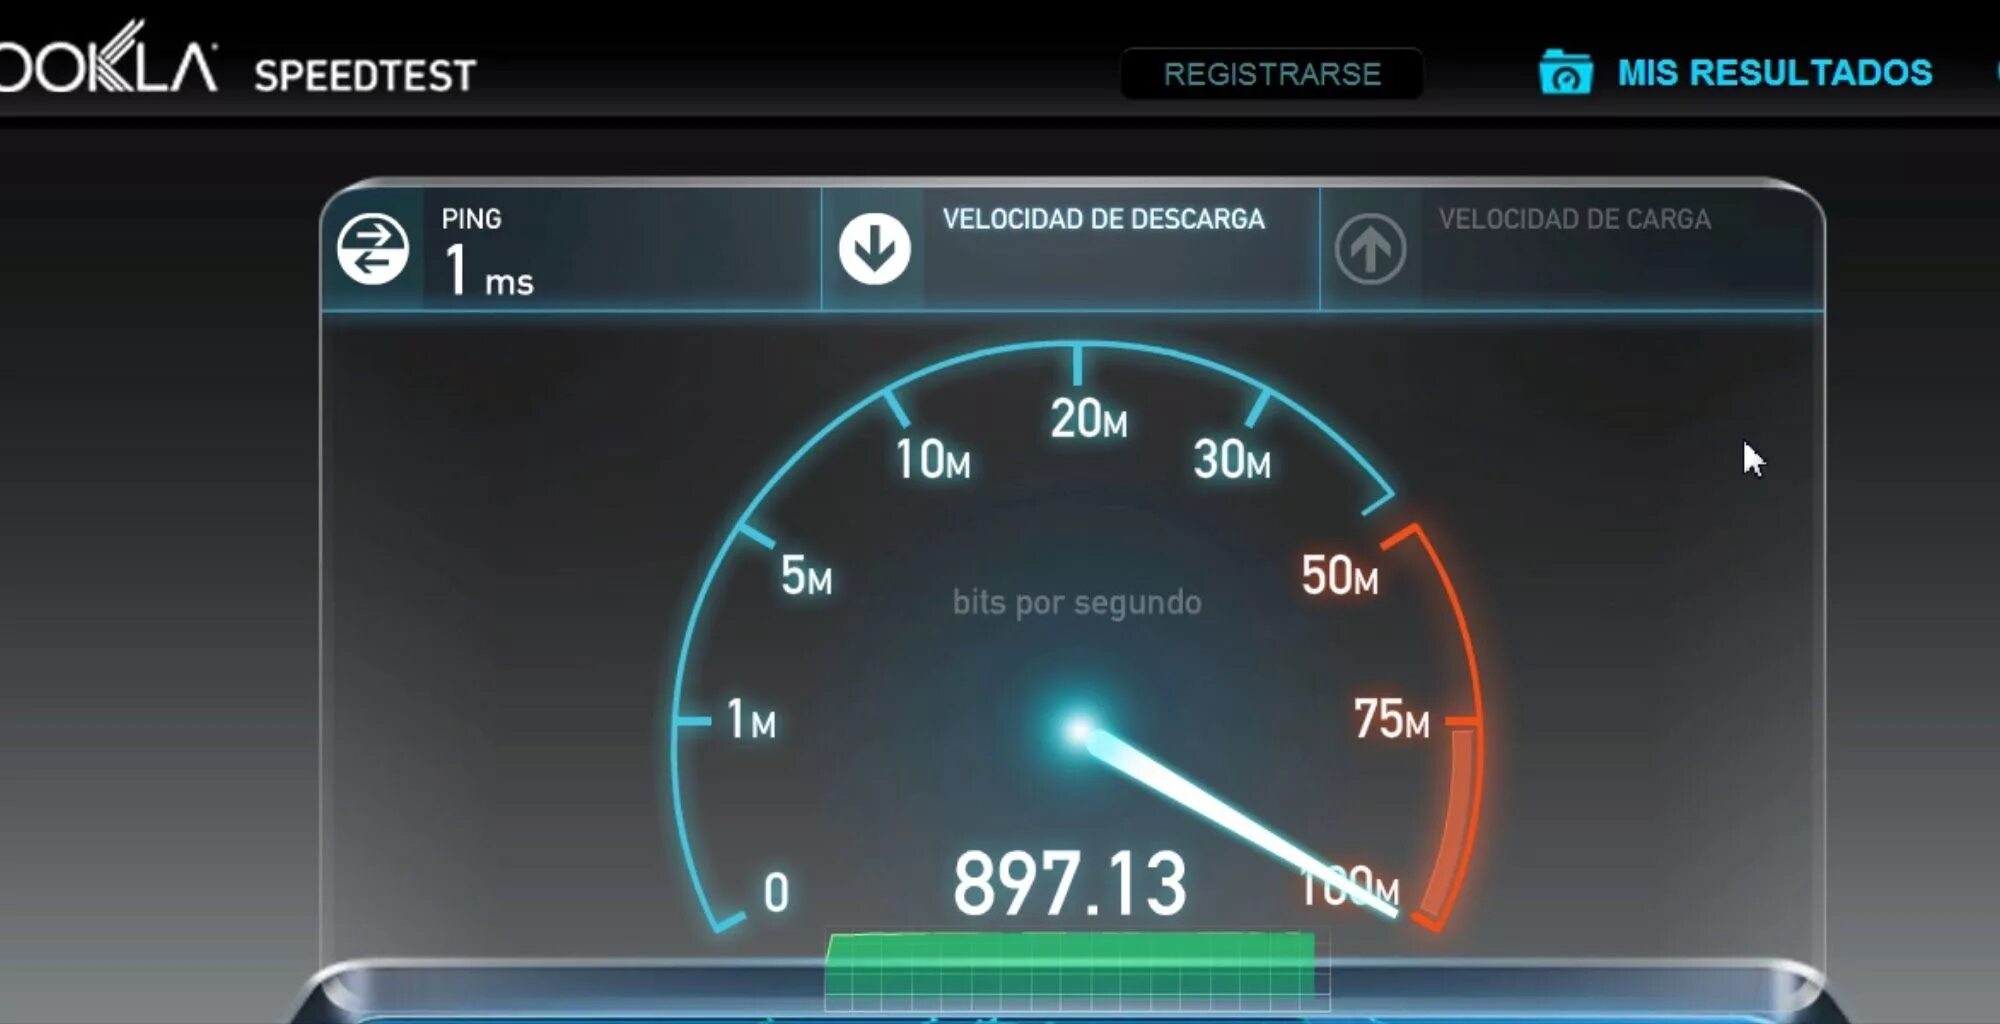 Ping скорости. Скорость интернета. Спидтест скорости интернета. Speedtest самый быстрый интернет.